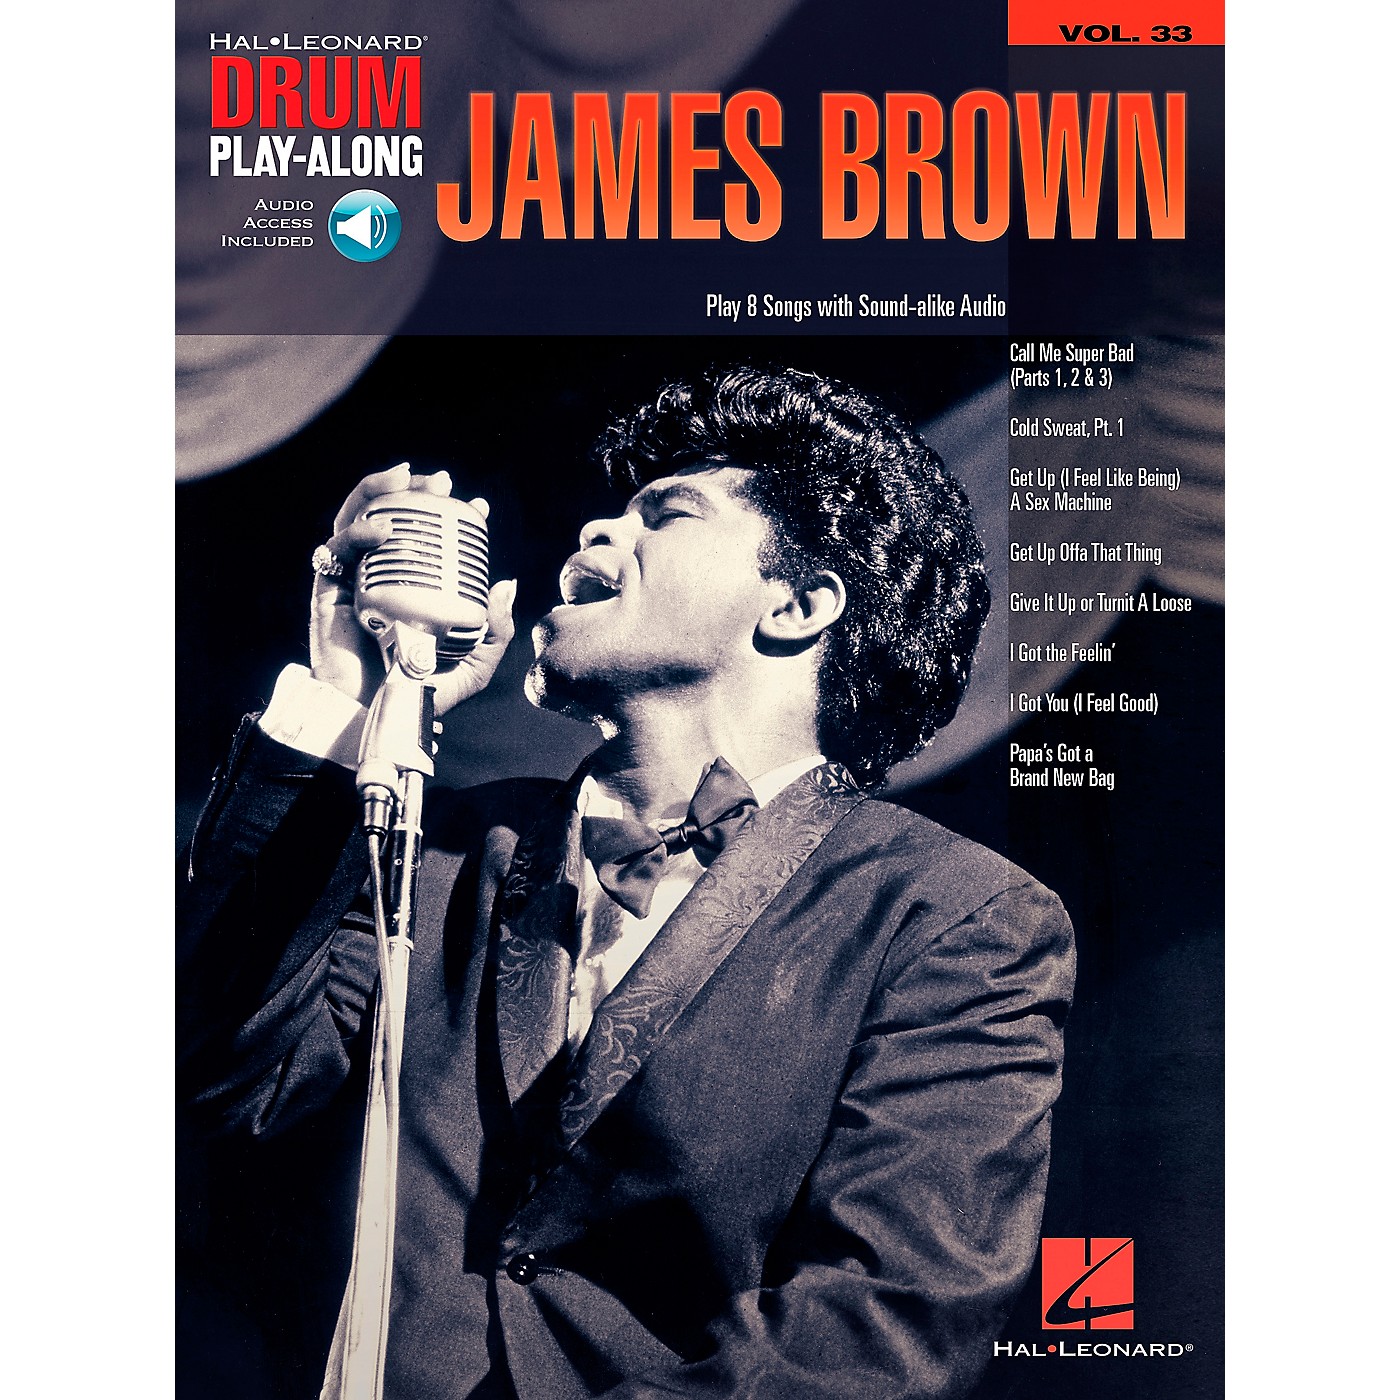 Hal Leonard James Brown - Drum Play-Along Volume 33 Book/CD thumbnail